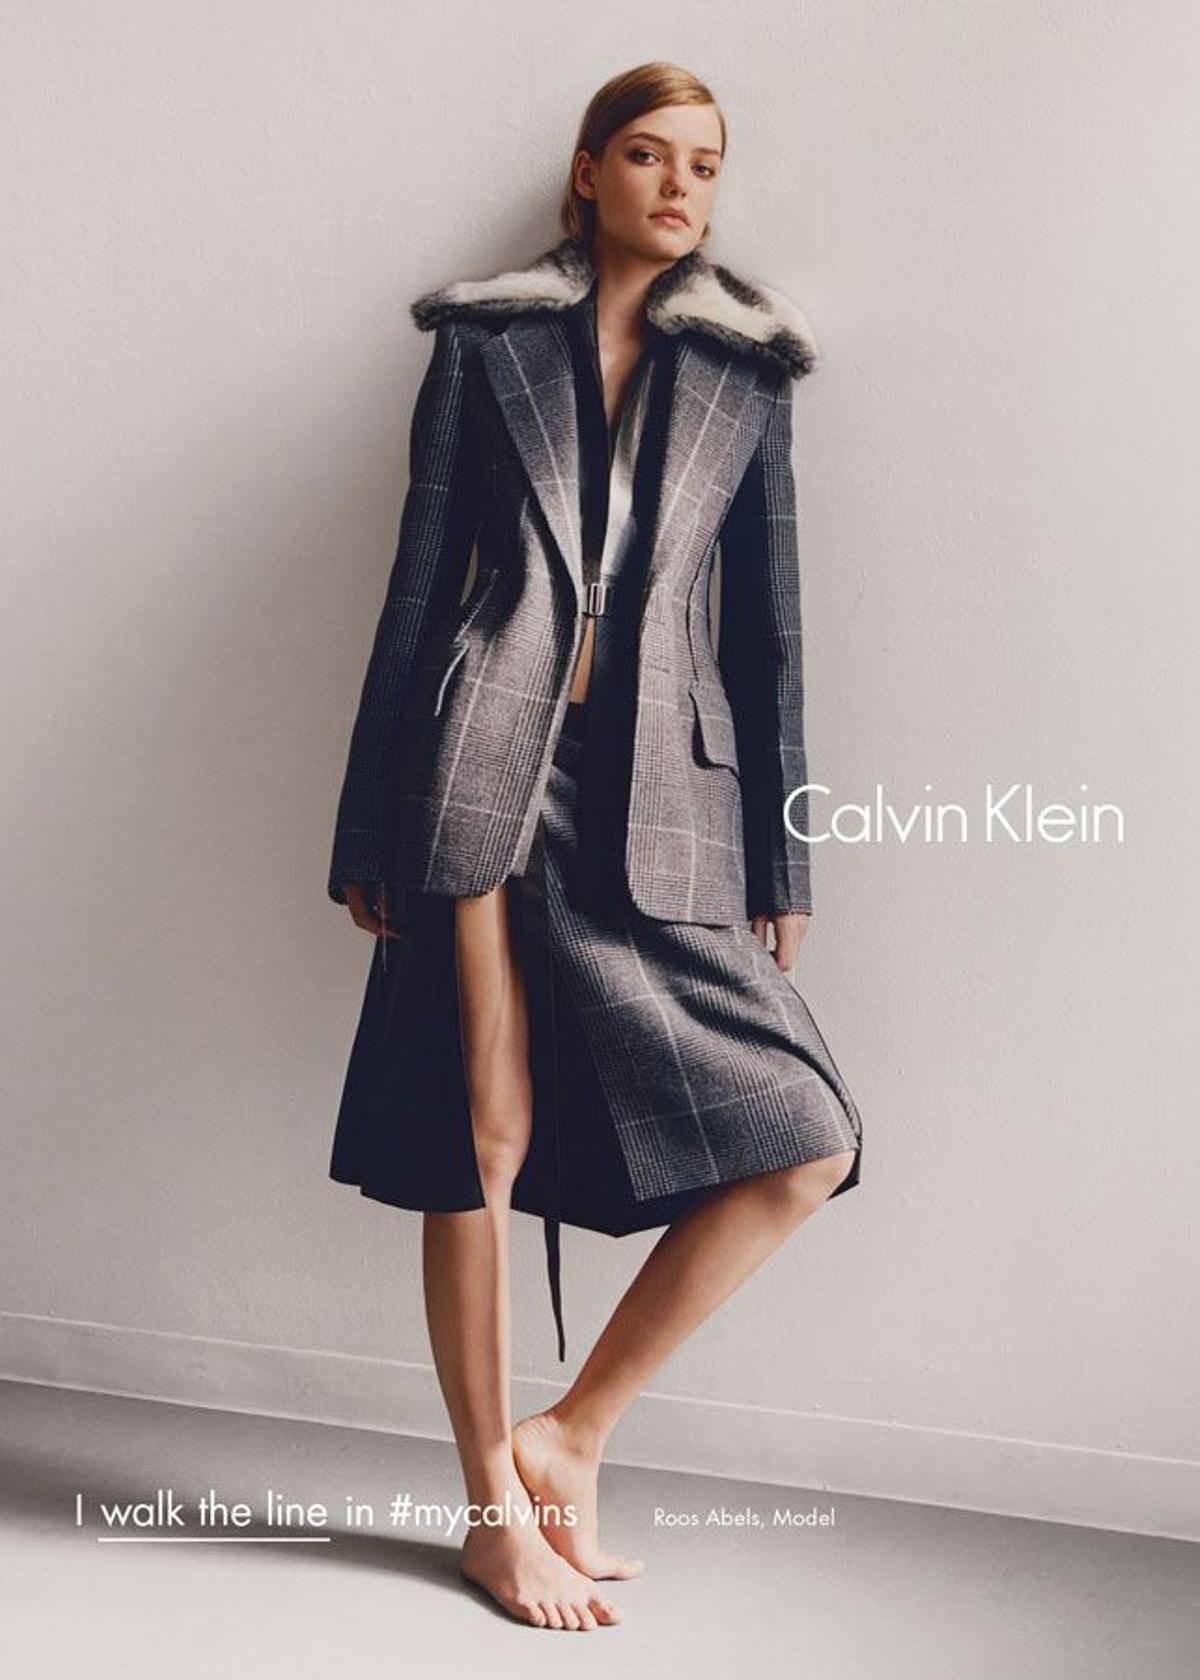 Campaña Calvin Klein otoño 2016: Roos Abels